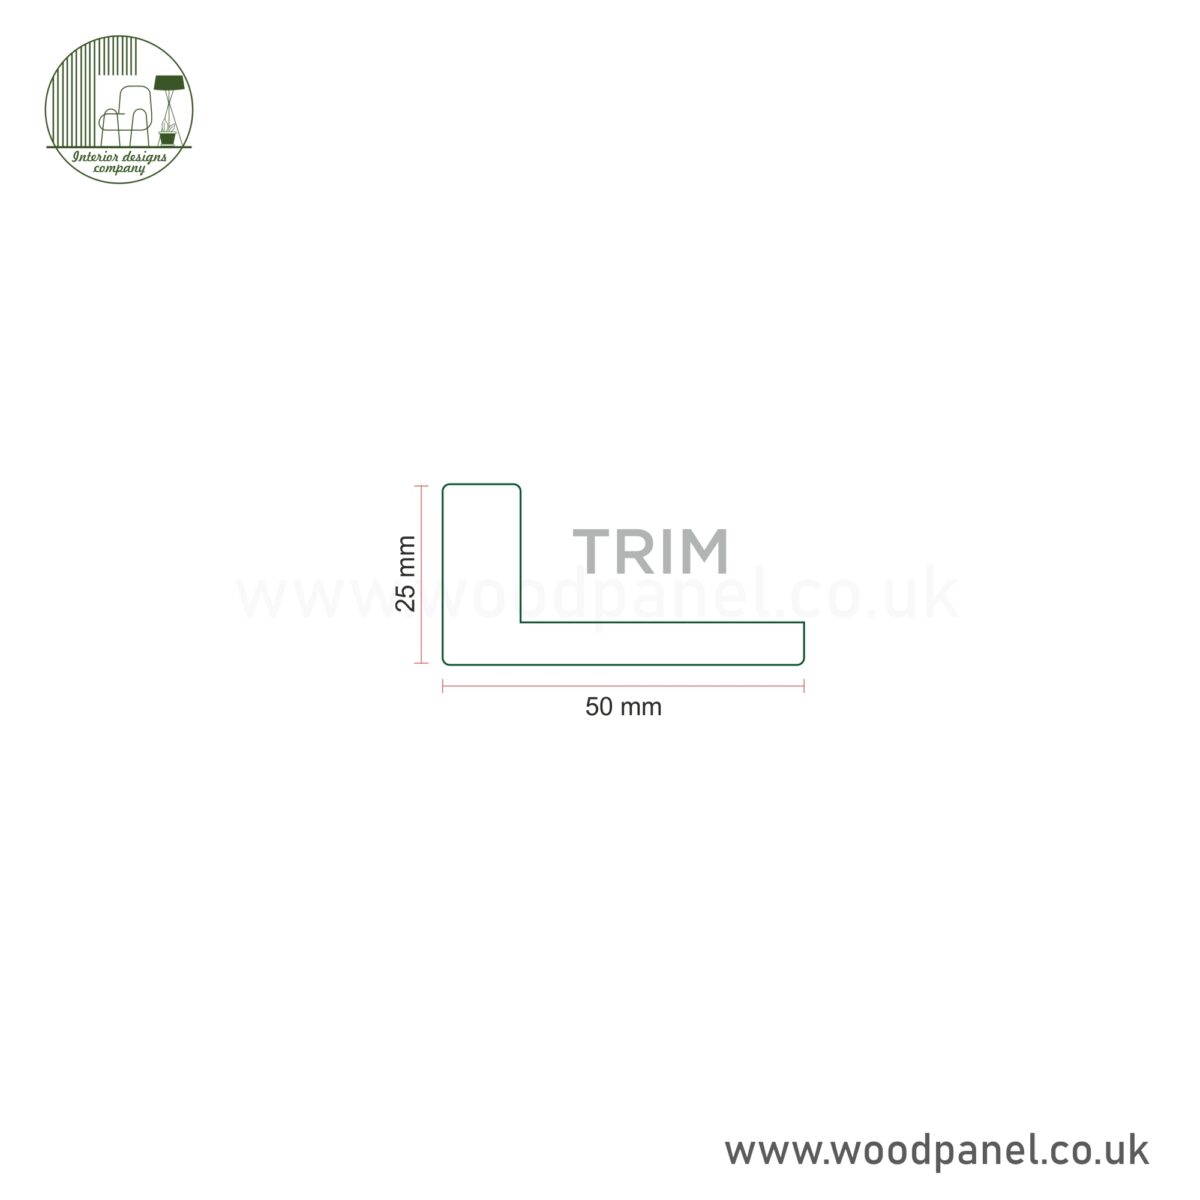 Trim 1 Magnum Opus Wood panel COLLECTION PANEL U363 FLAMINGO PINK WOOD GRAIN FINISH TOP/BOTTOM TRIM CAP ,ST125